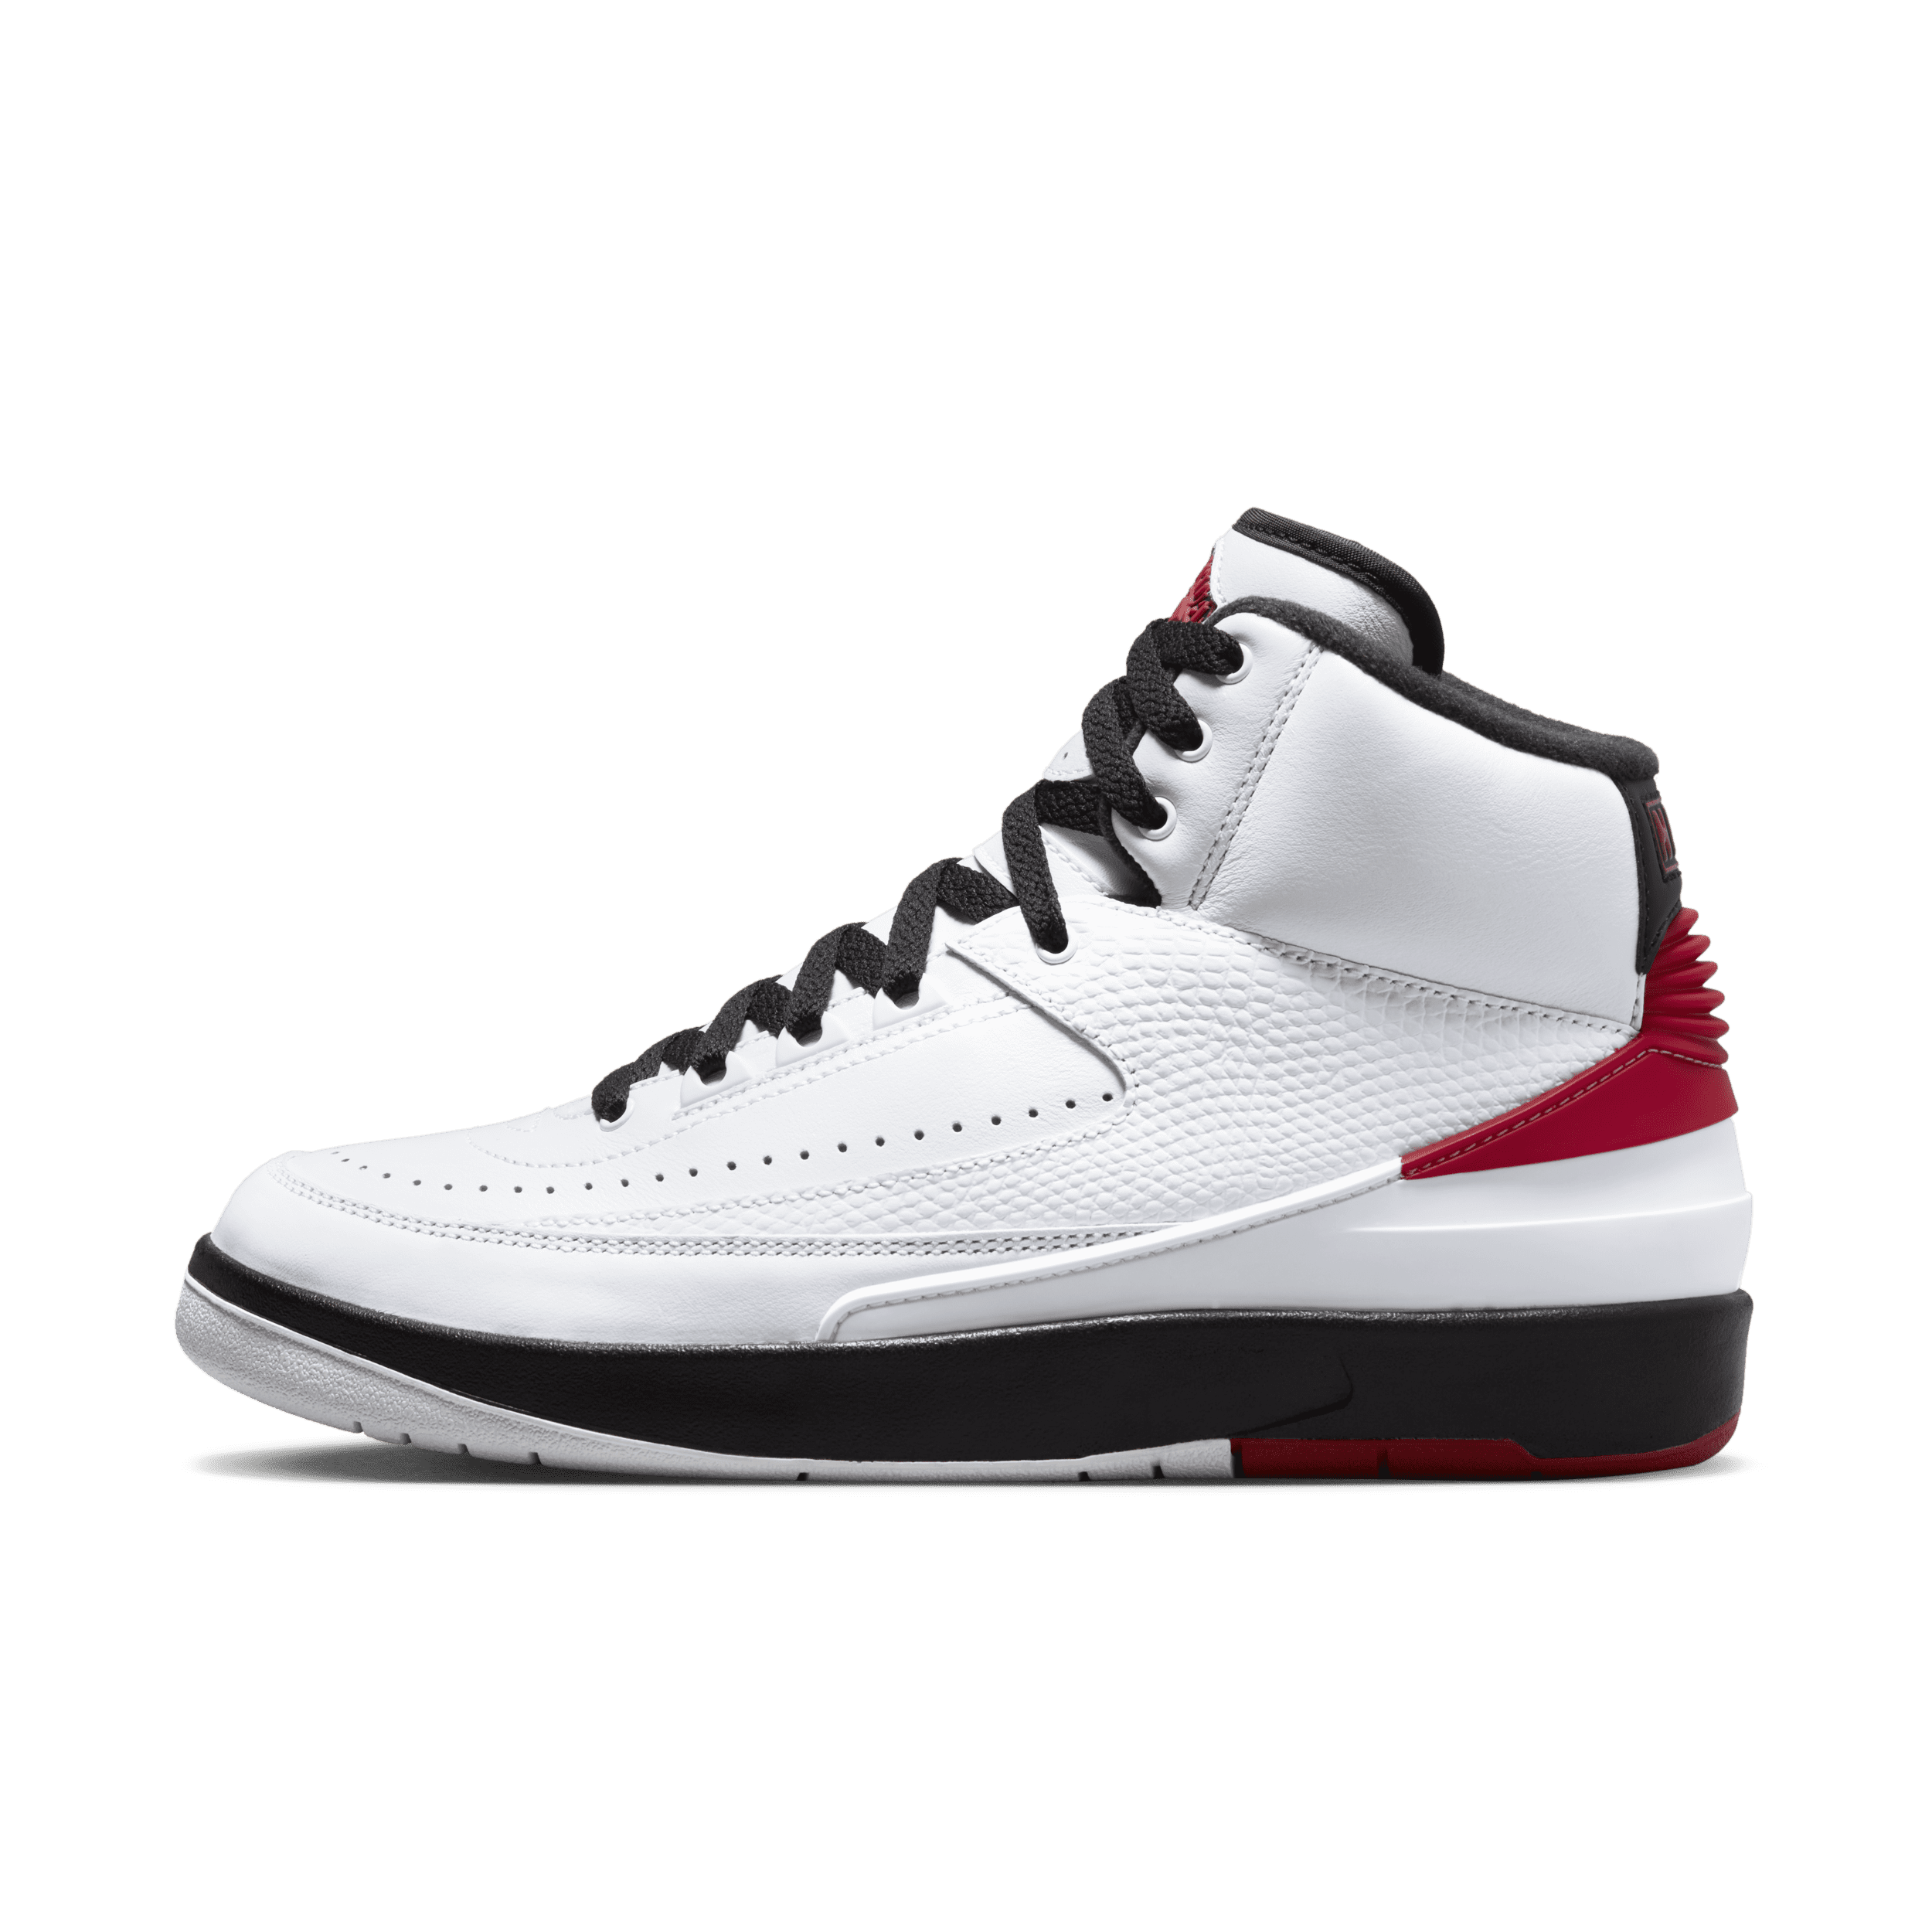 Air Jordan 2 Retro-sko til kvinder - hvid